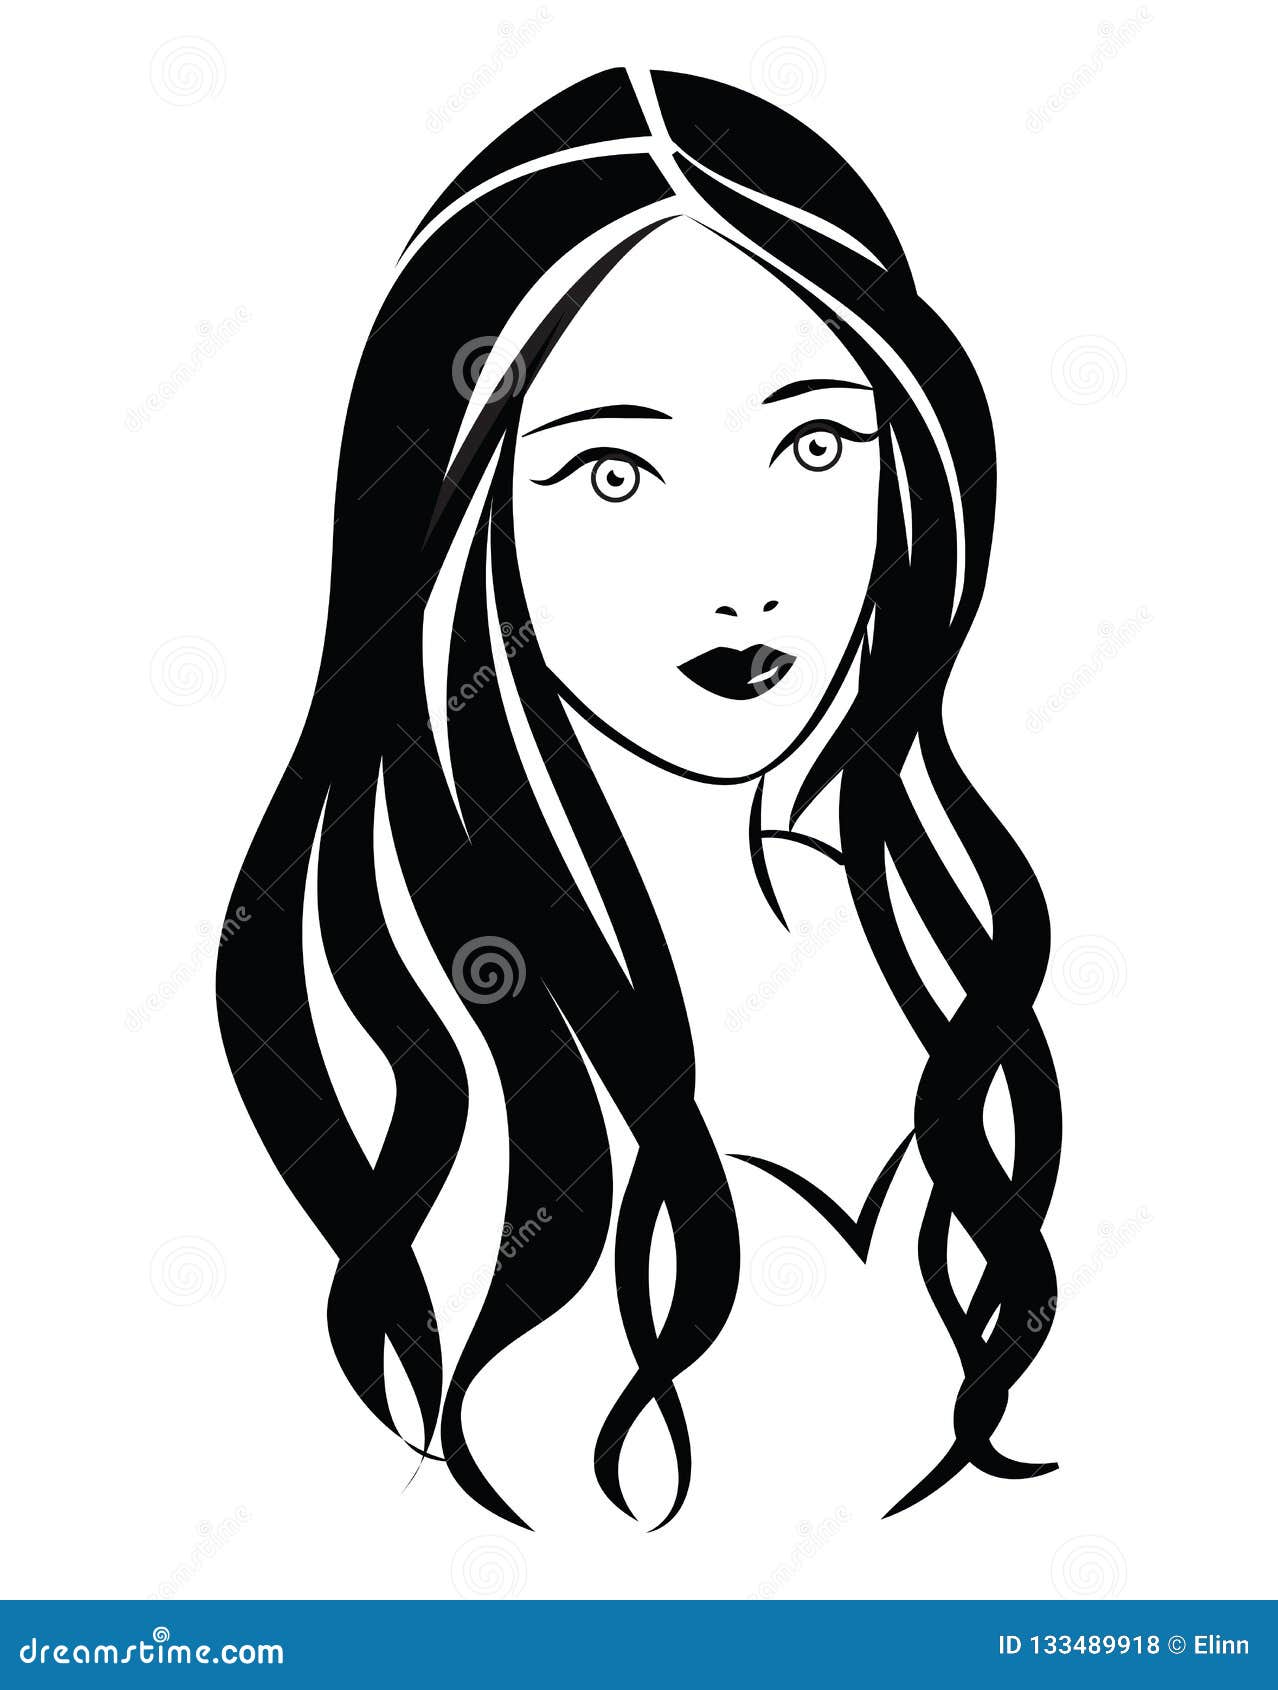 Woman with long hair logo stock vector. Illustration of salon - 133489918